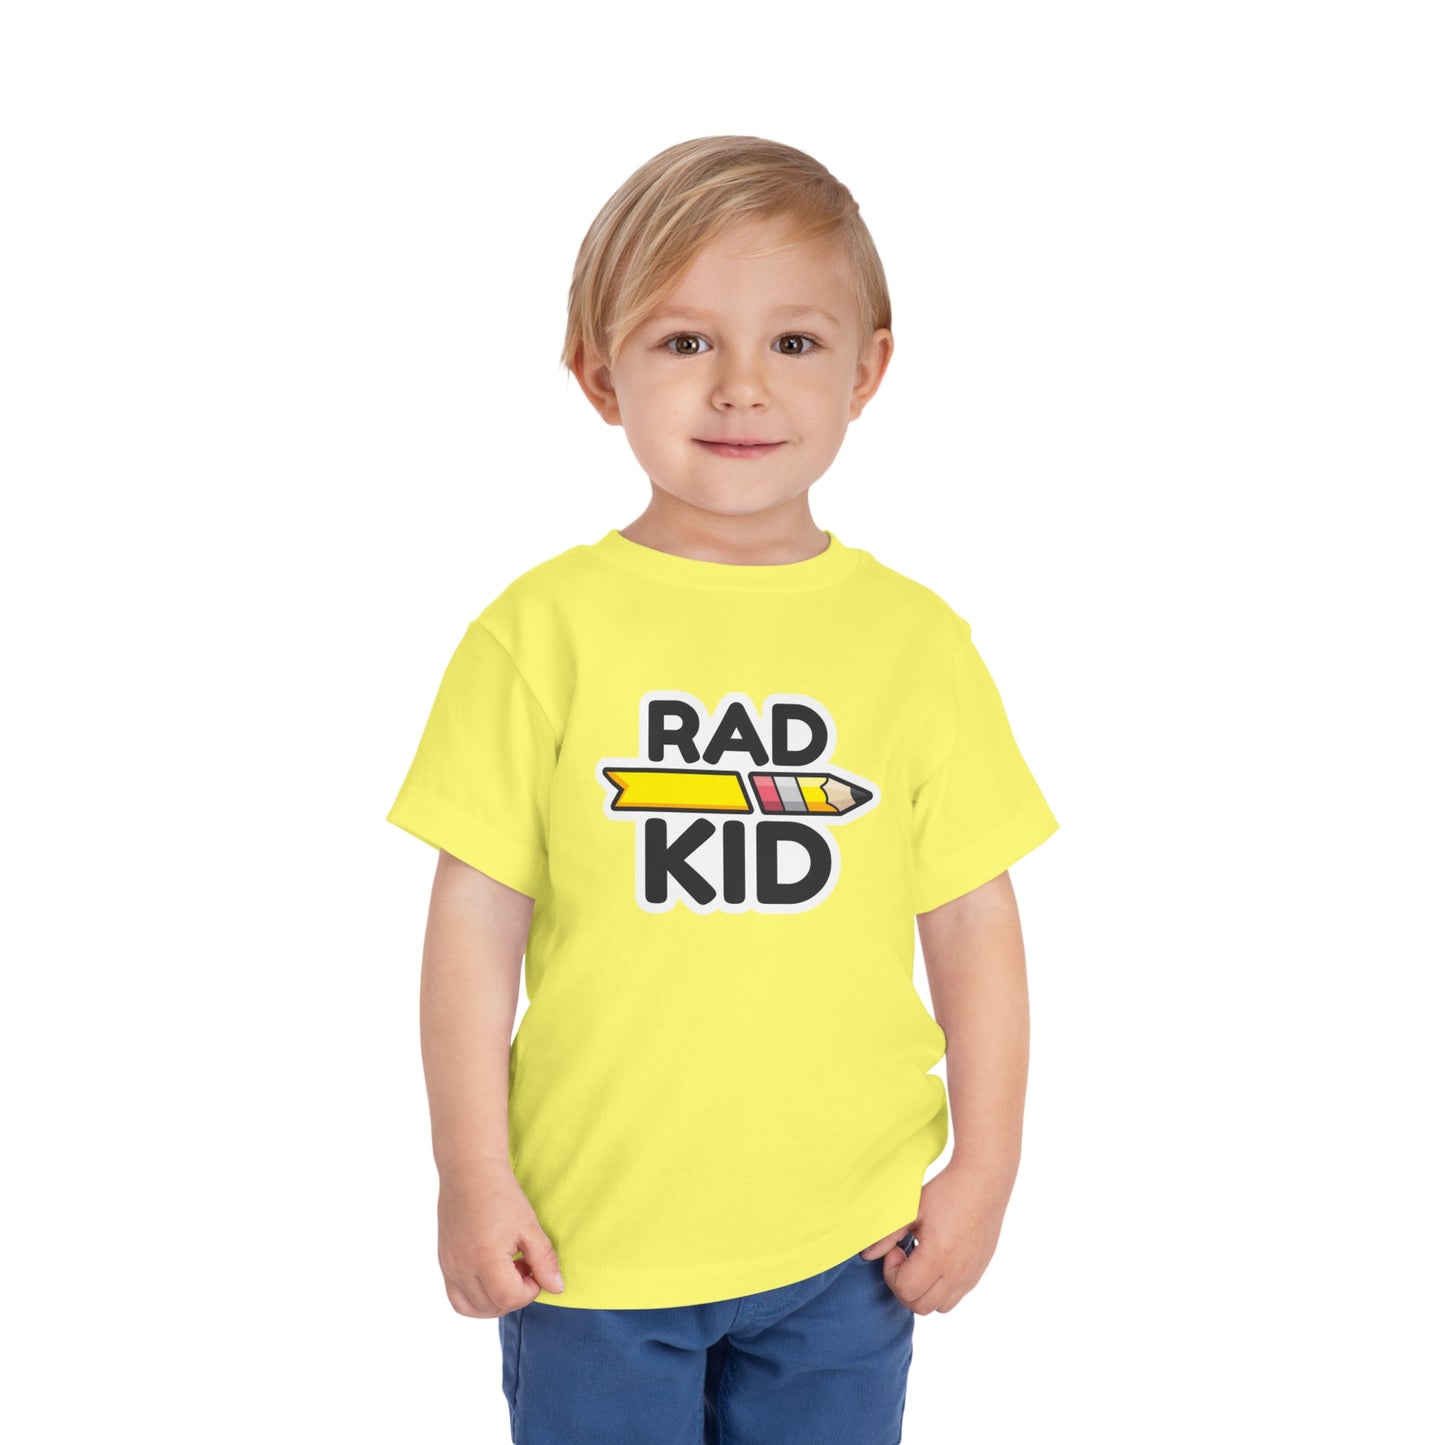 "RAD KID" SQUAD Toddler Short Sleeve Tee Shirt